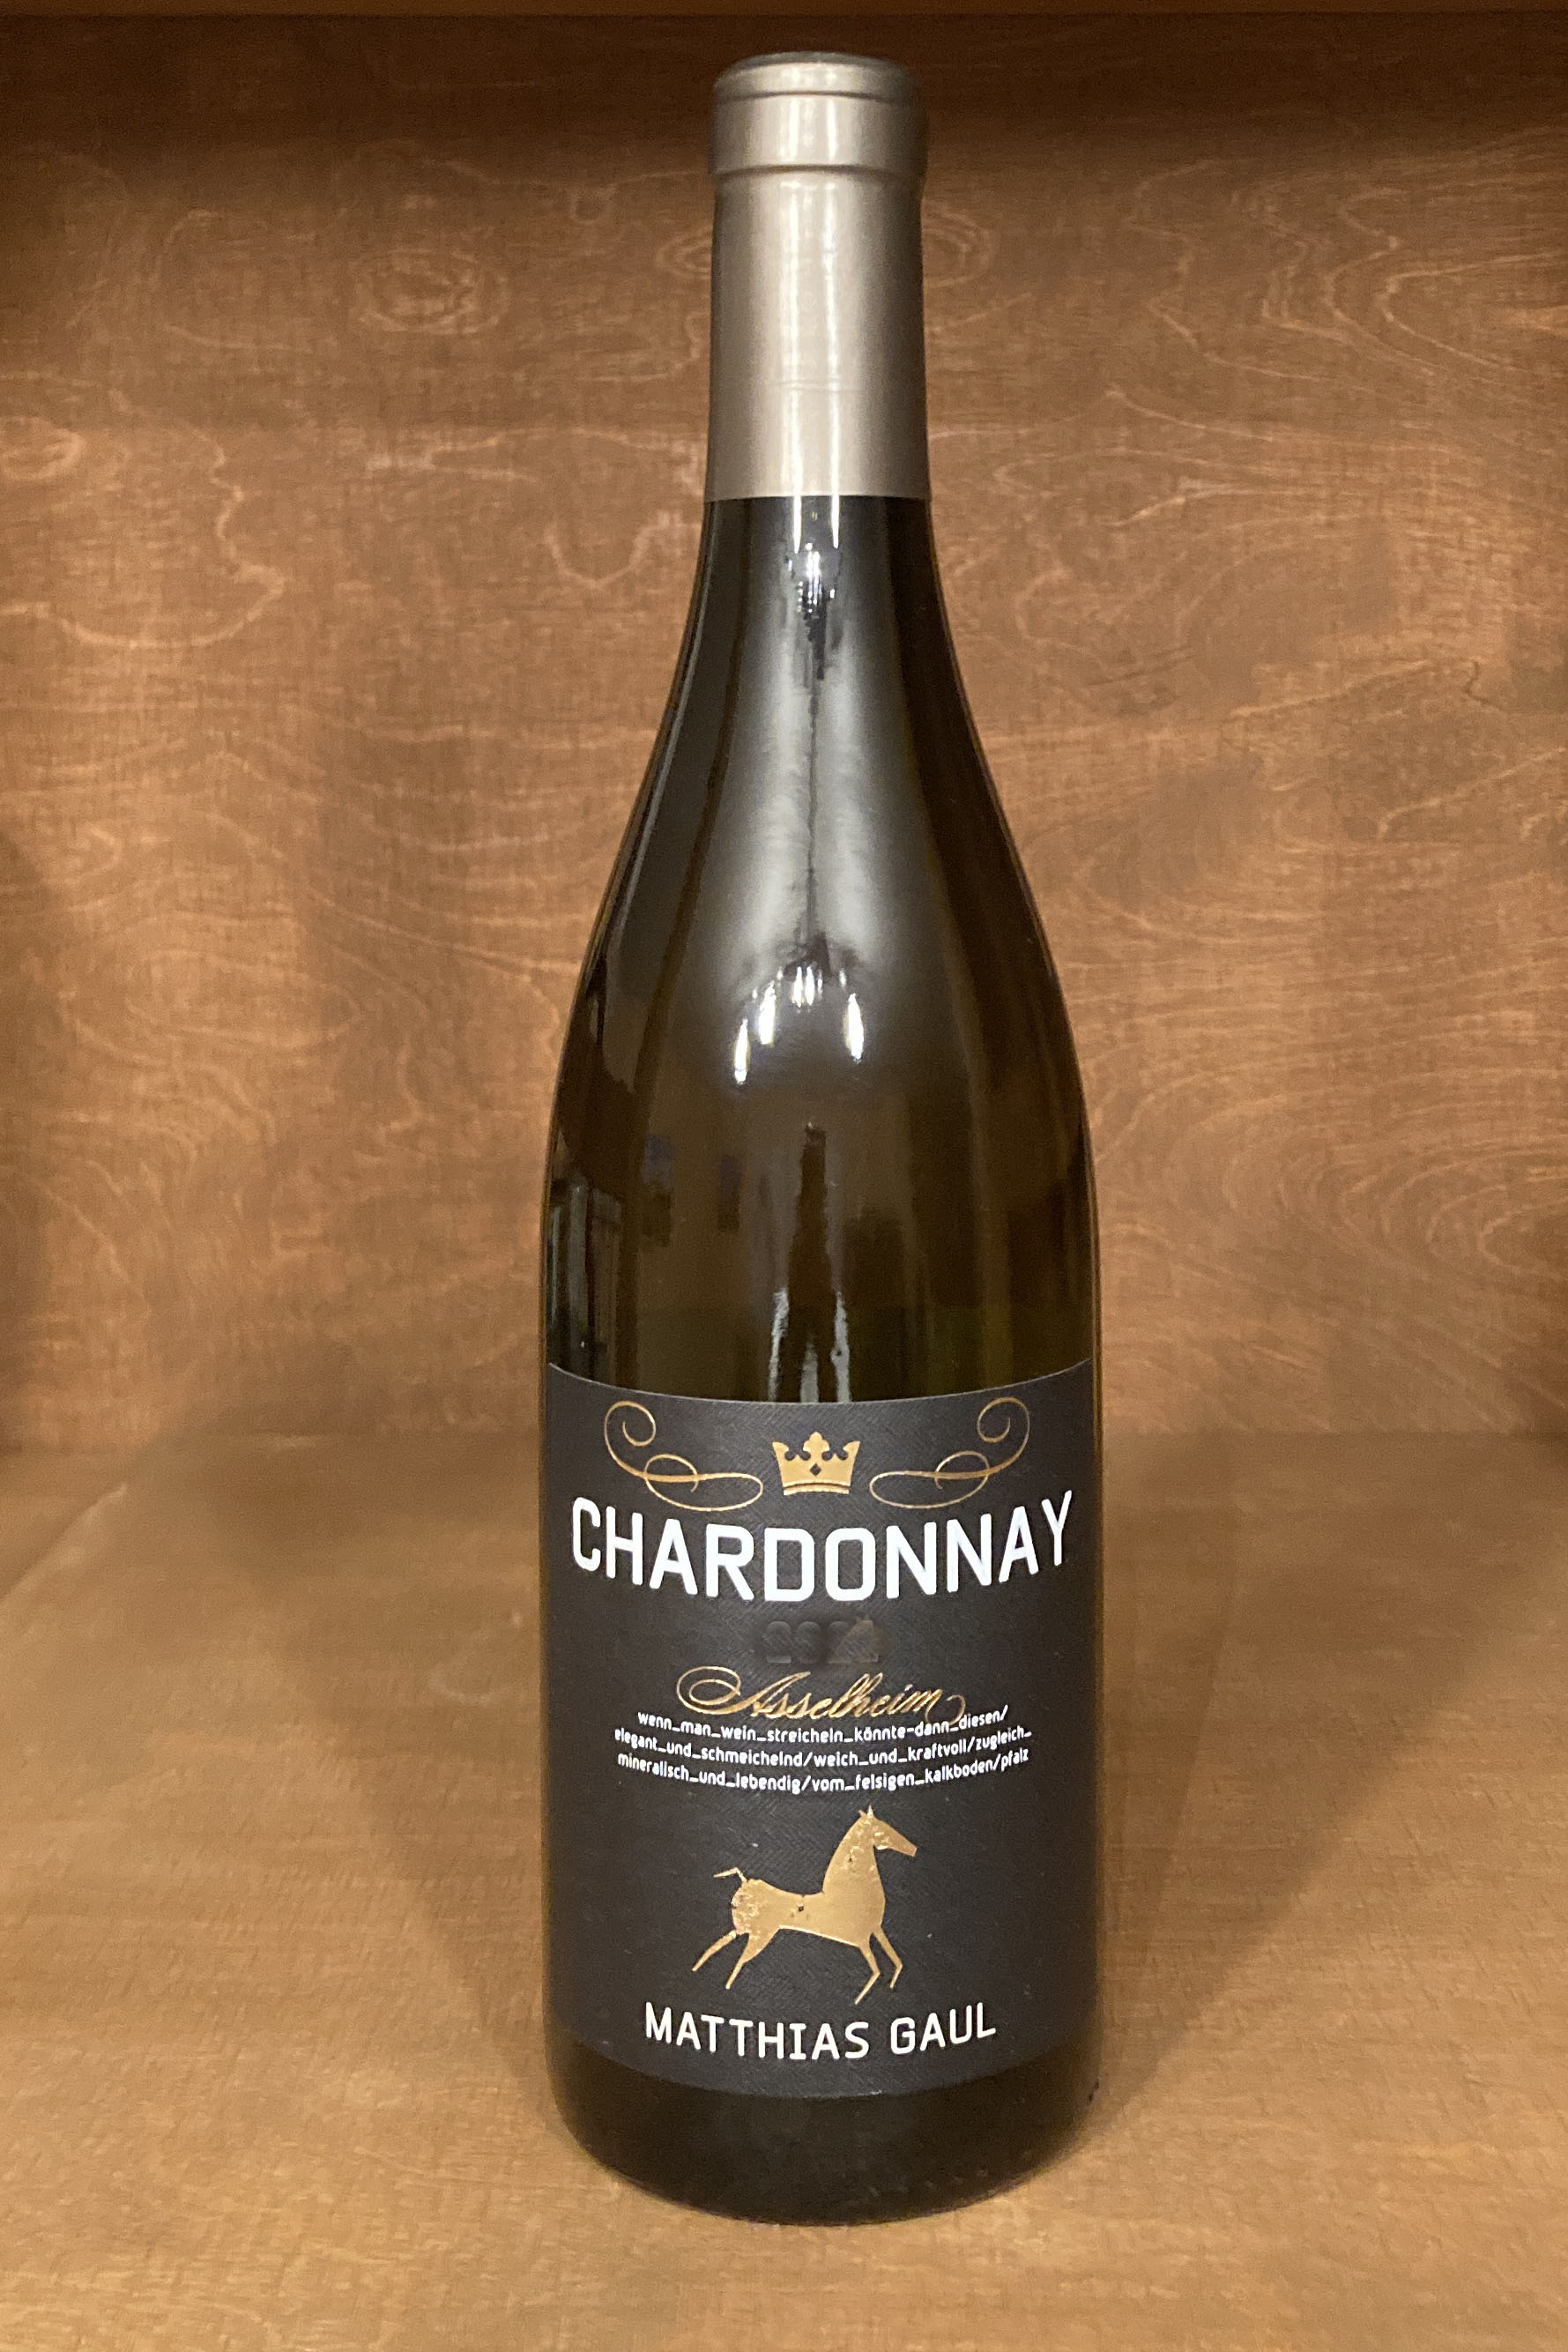 2021 Chardonnay Asselheim, Weingut Matthias Gaul, Pfalz